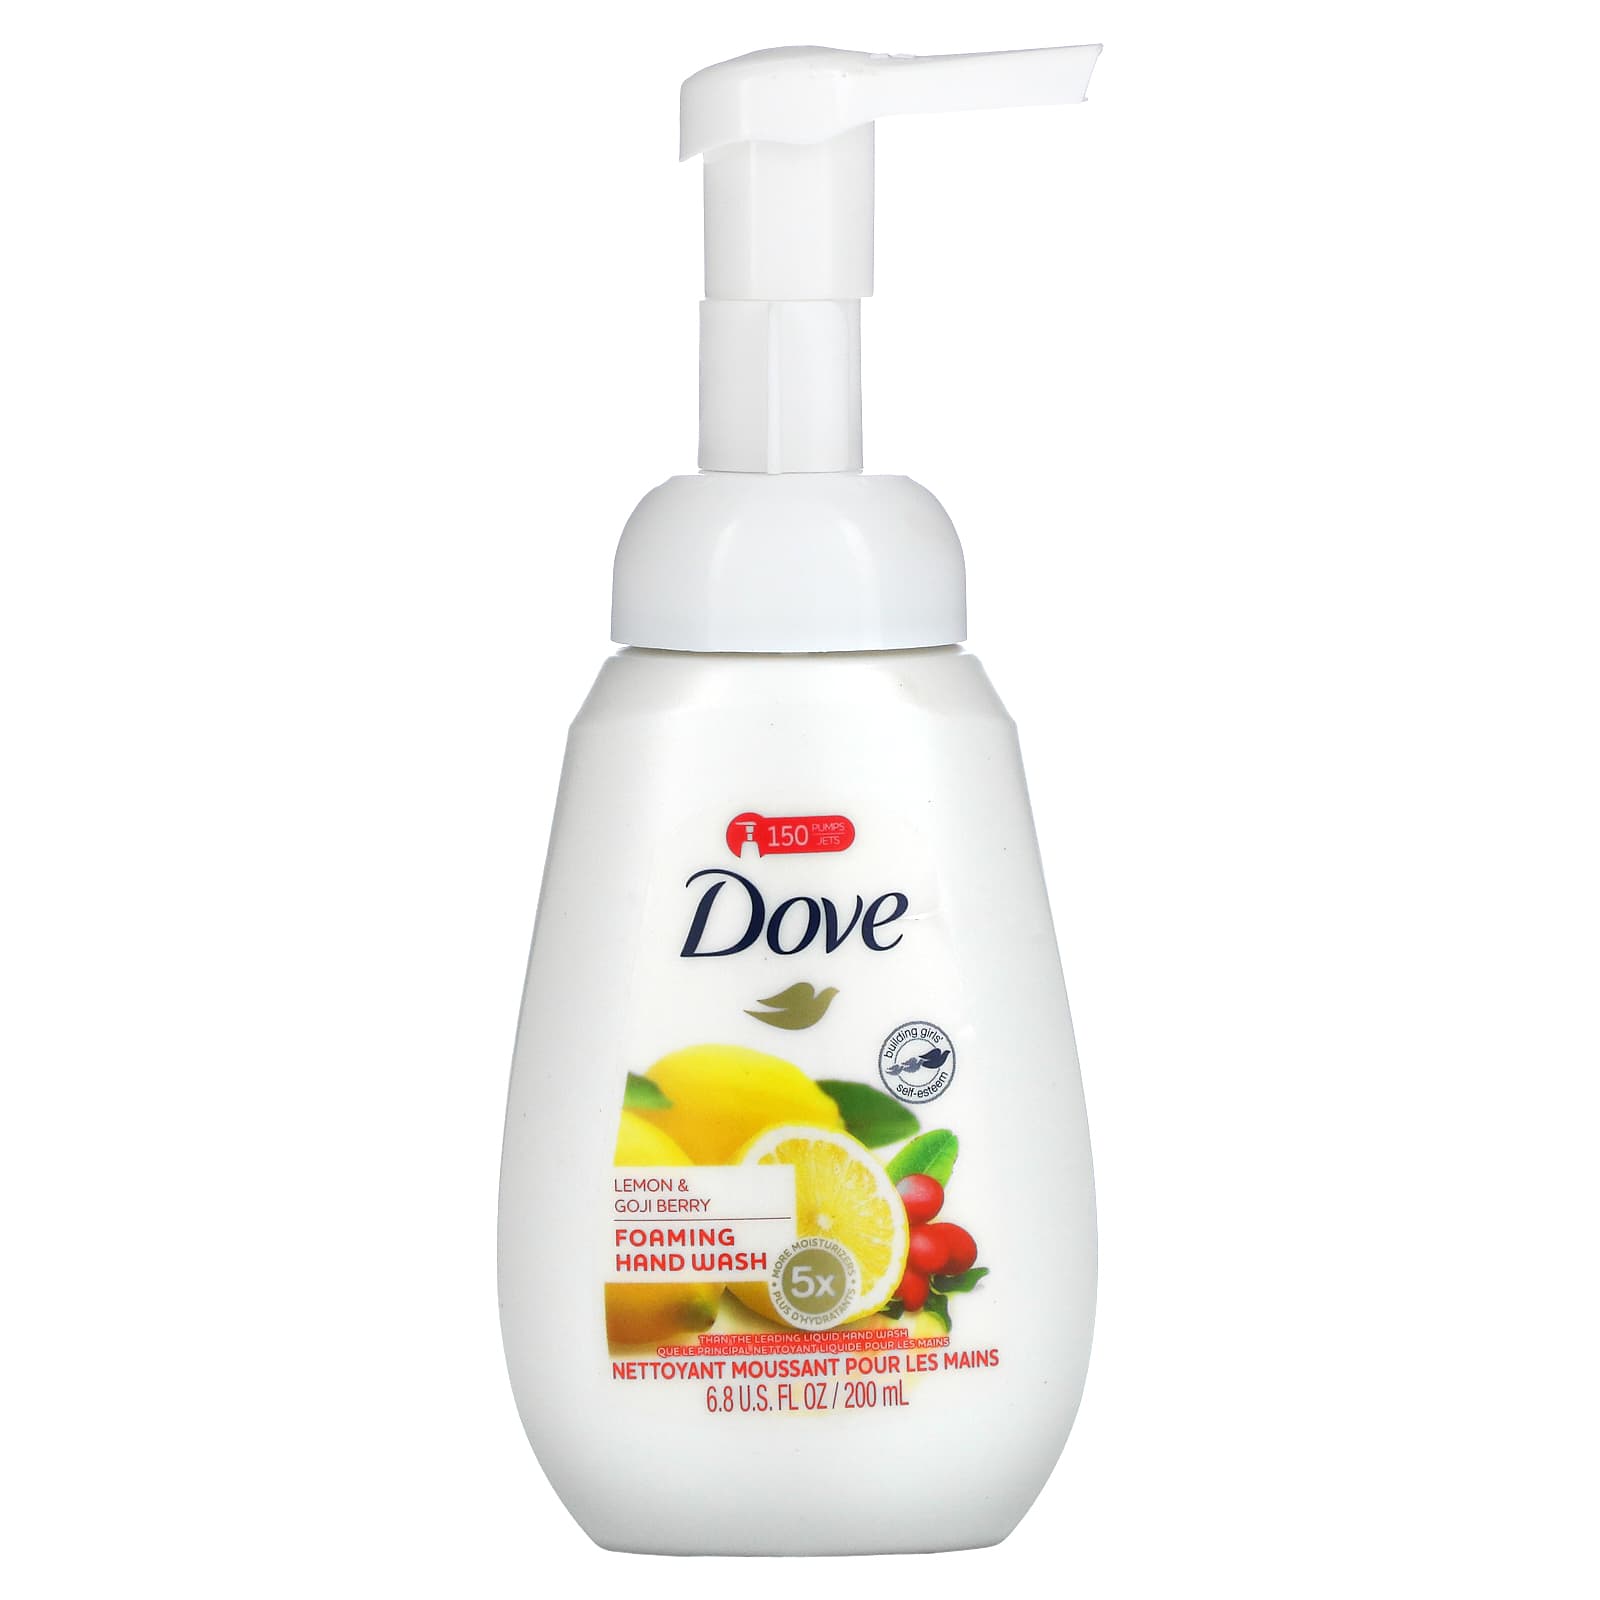 Dove, Foaming Hand Wash, Lemon & Goji Berry (200 ml)